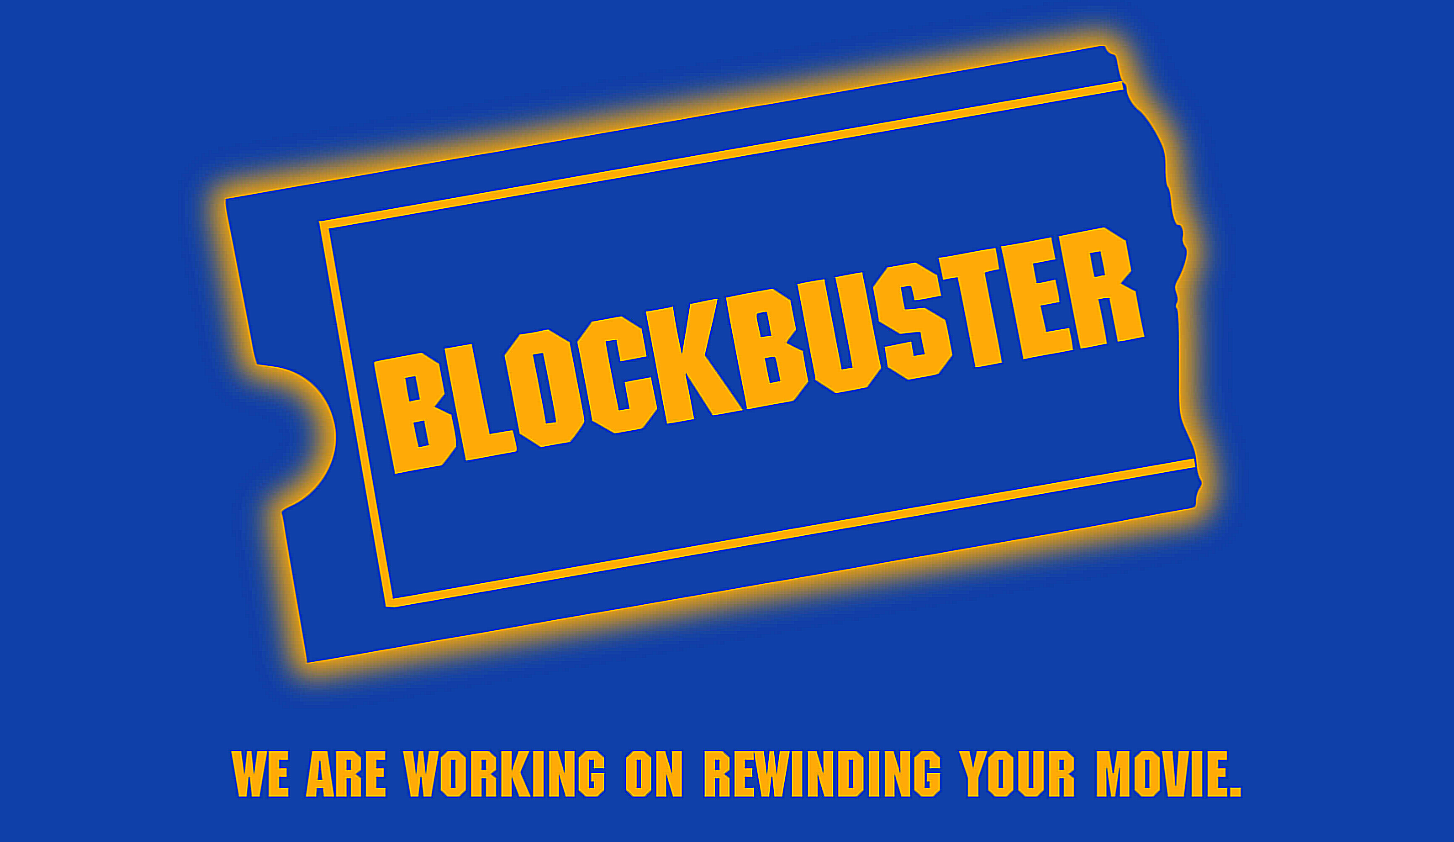 Imagem mostra o logotipo das locadoras Blockbuster, junto do slogan 